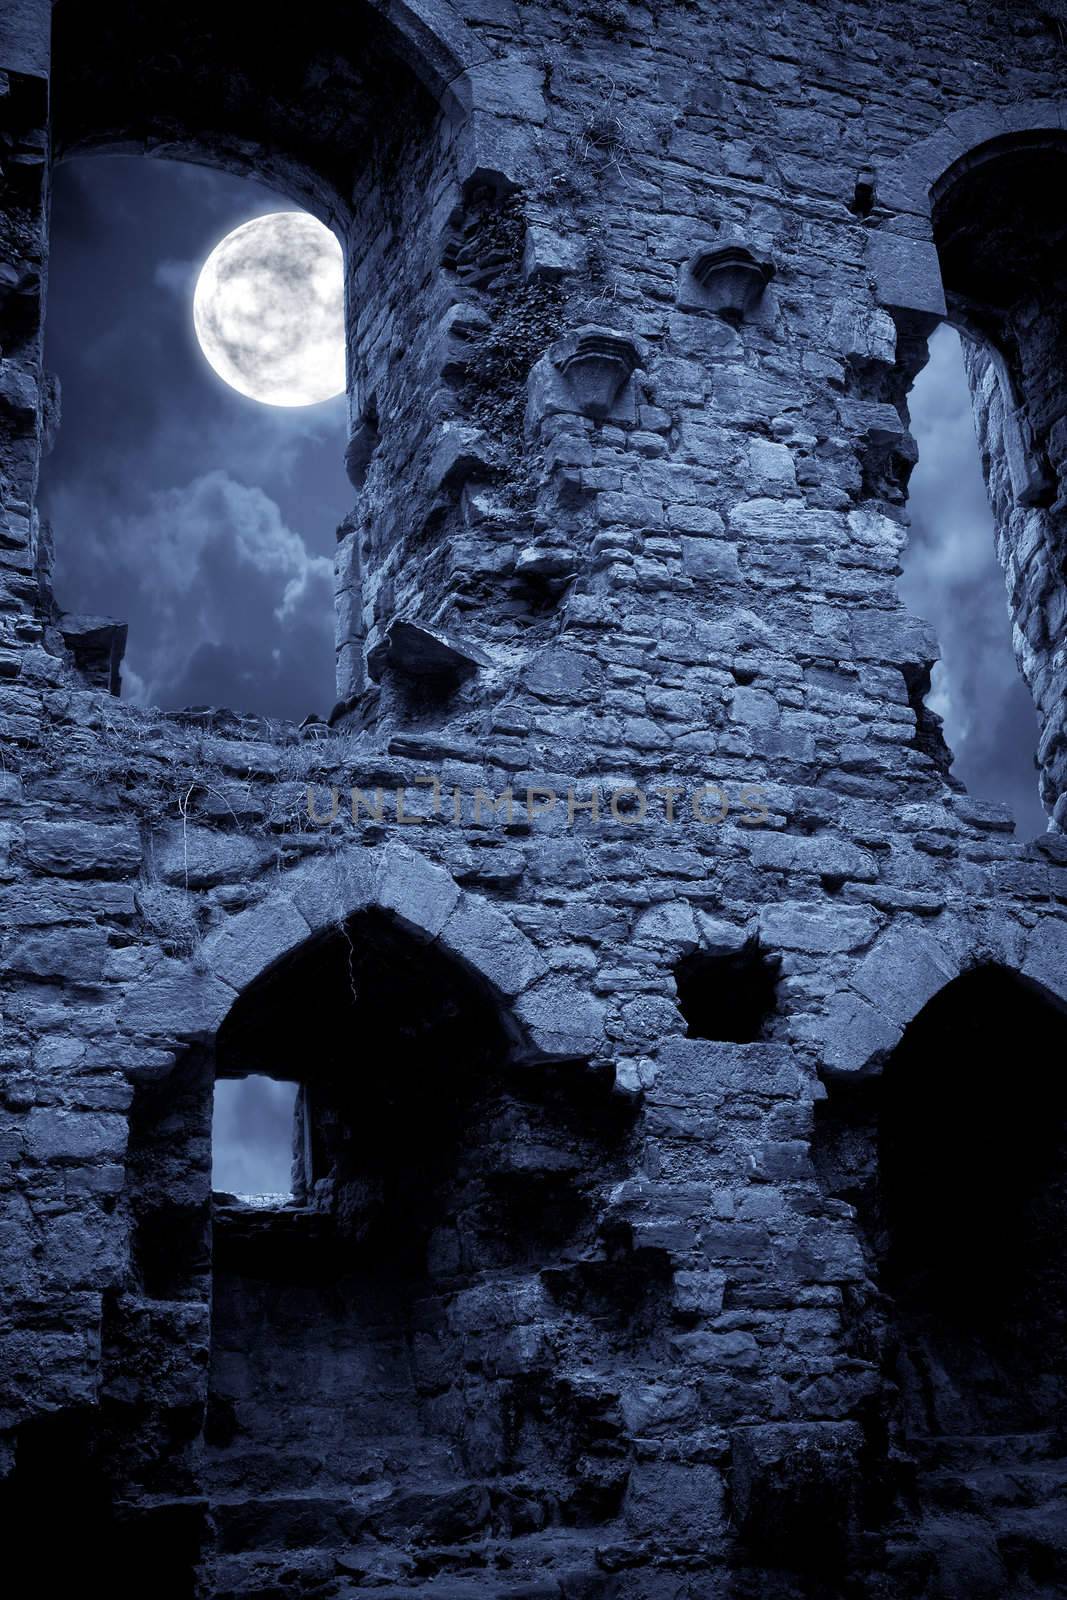 A very spooky Halloween castle in the moonlight
